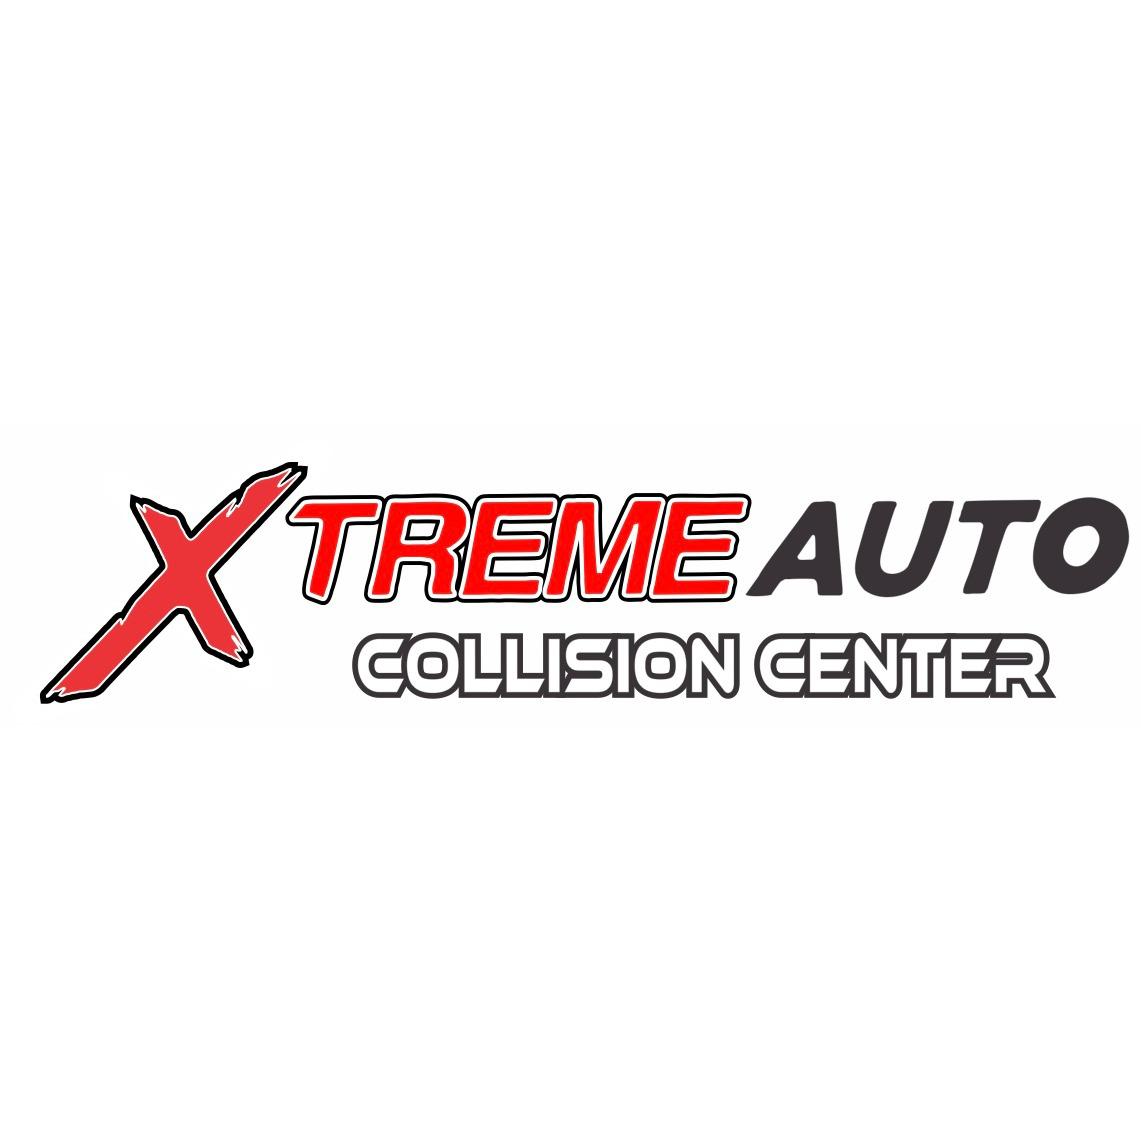 Xtreme Autobody & Collision Center